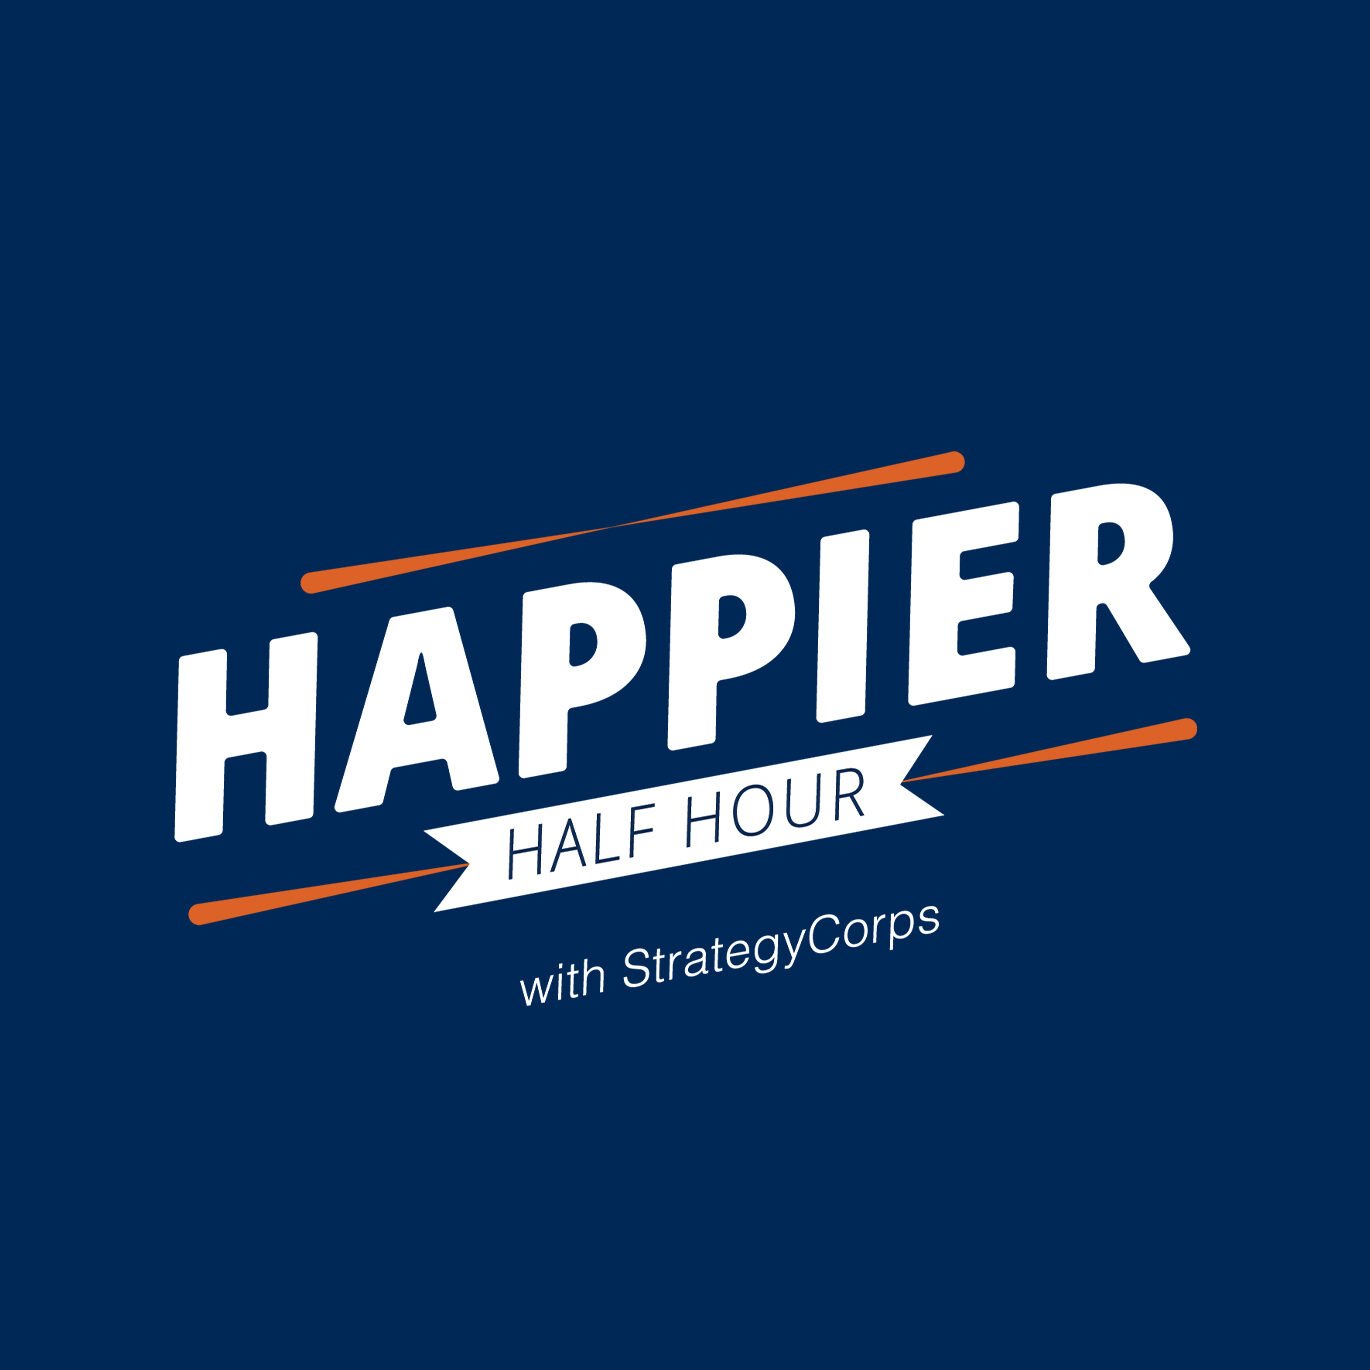 HappyHalfHour_Logo1-FB